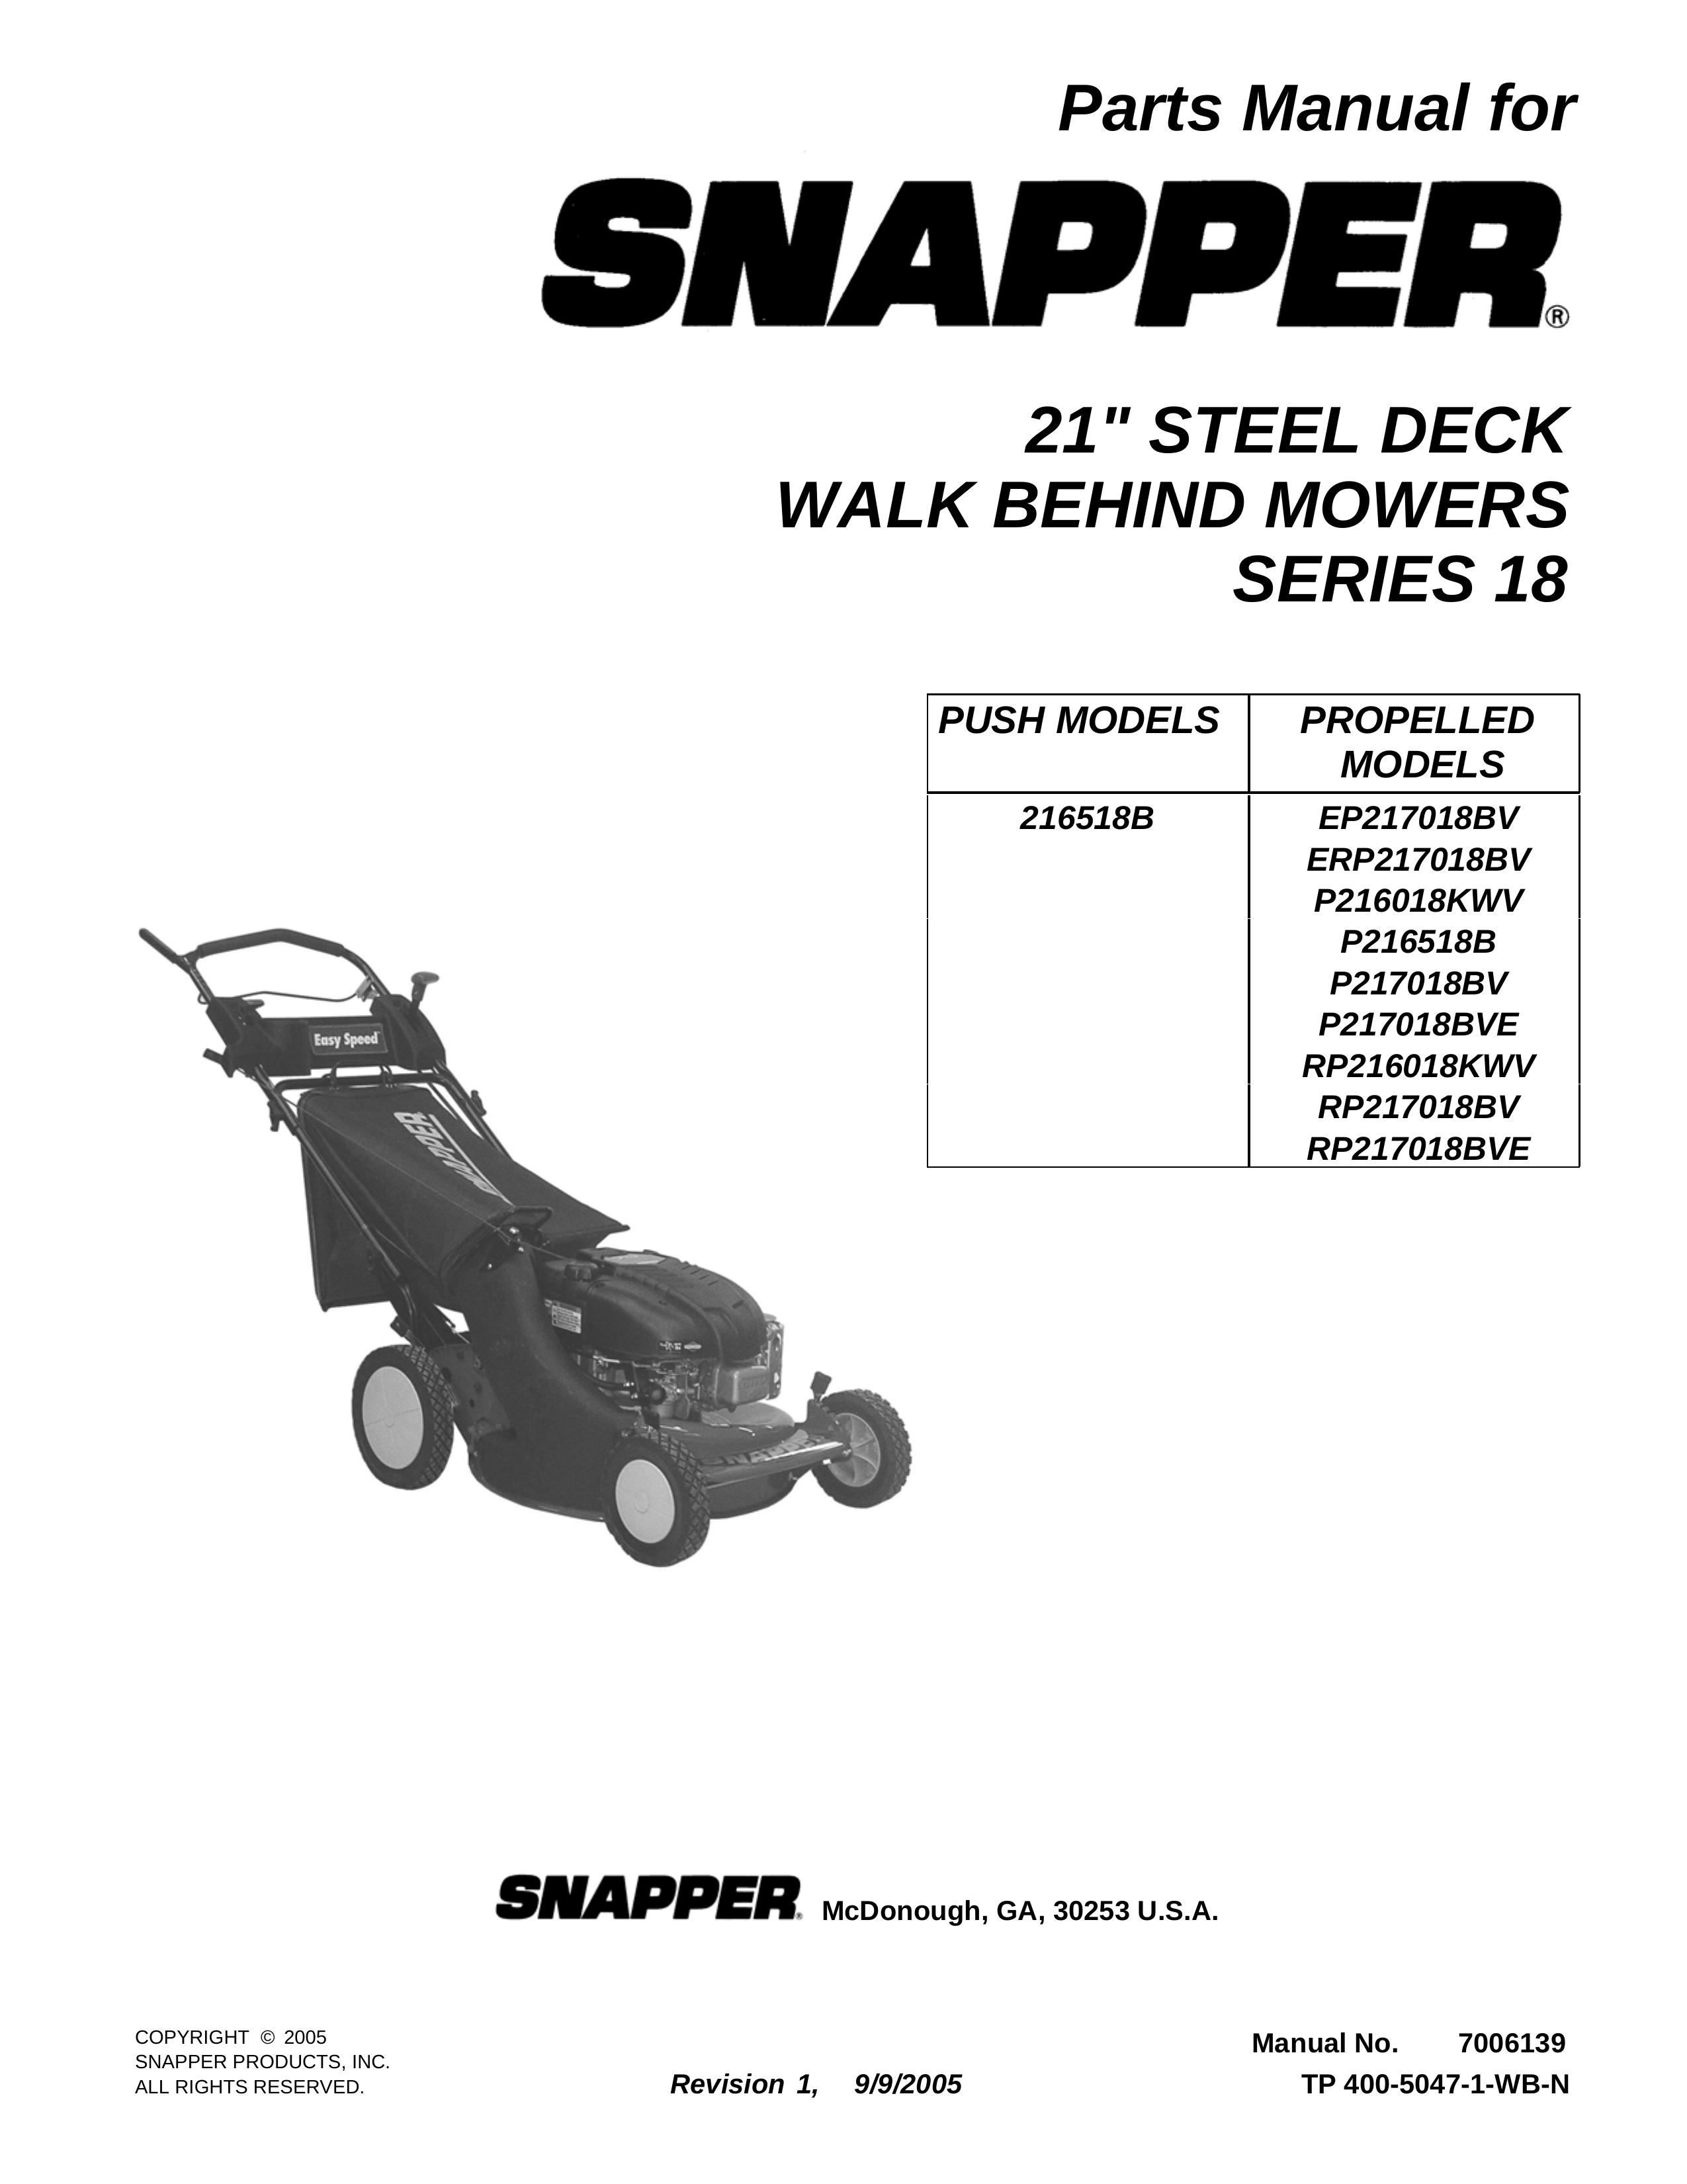 Snapper RP217018BVE Camcorder User Manual